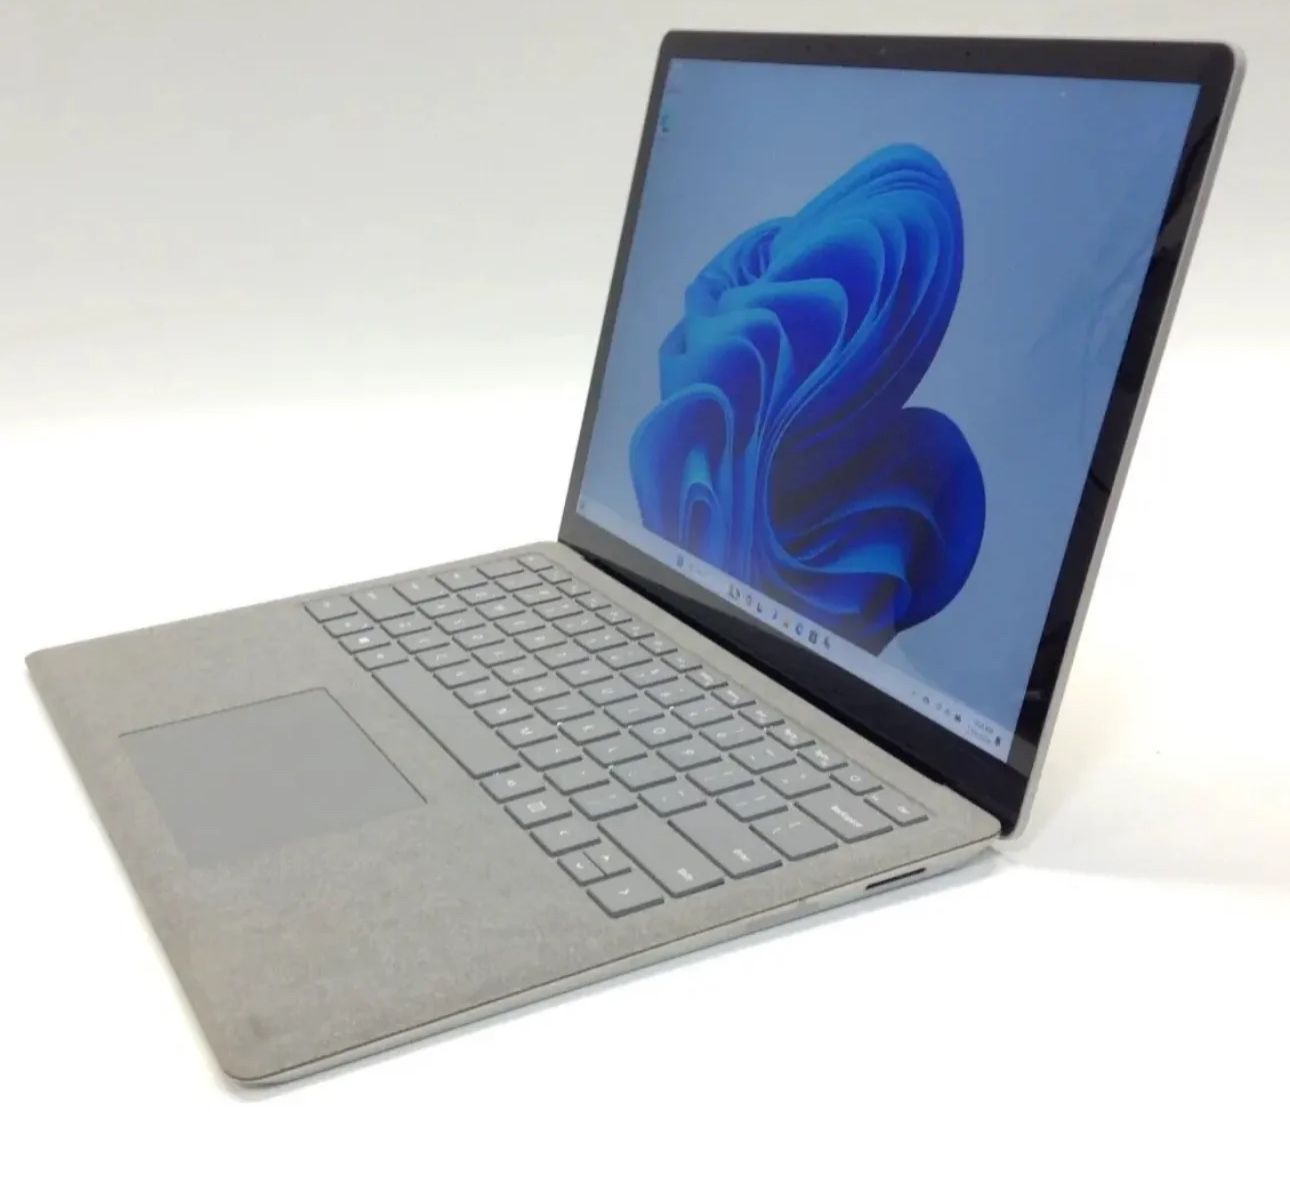 Microsoft Surface Laptop 2 i5-8350U, 1.7GHz, Dual-Core 8GB RAM 128GB SSD 13.5" touchscreen